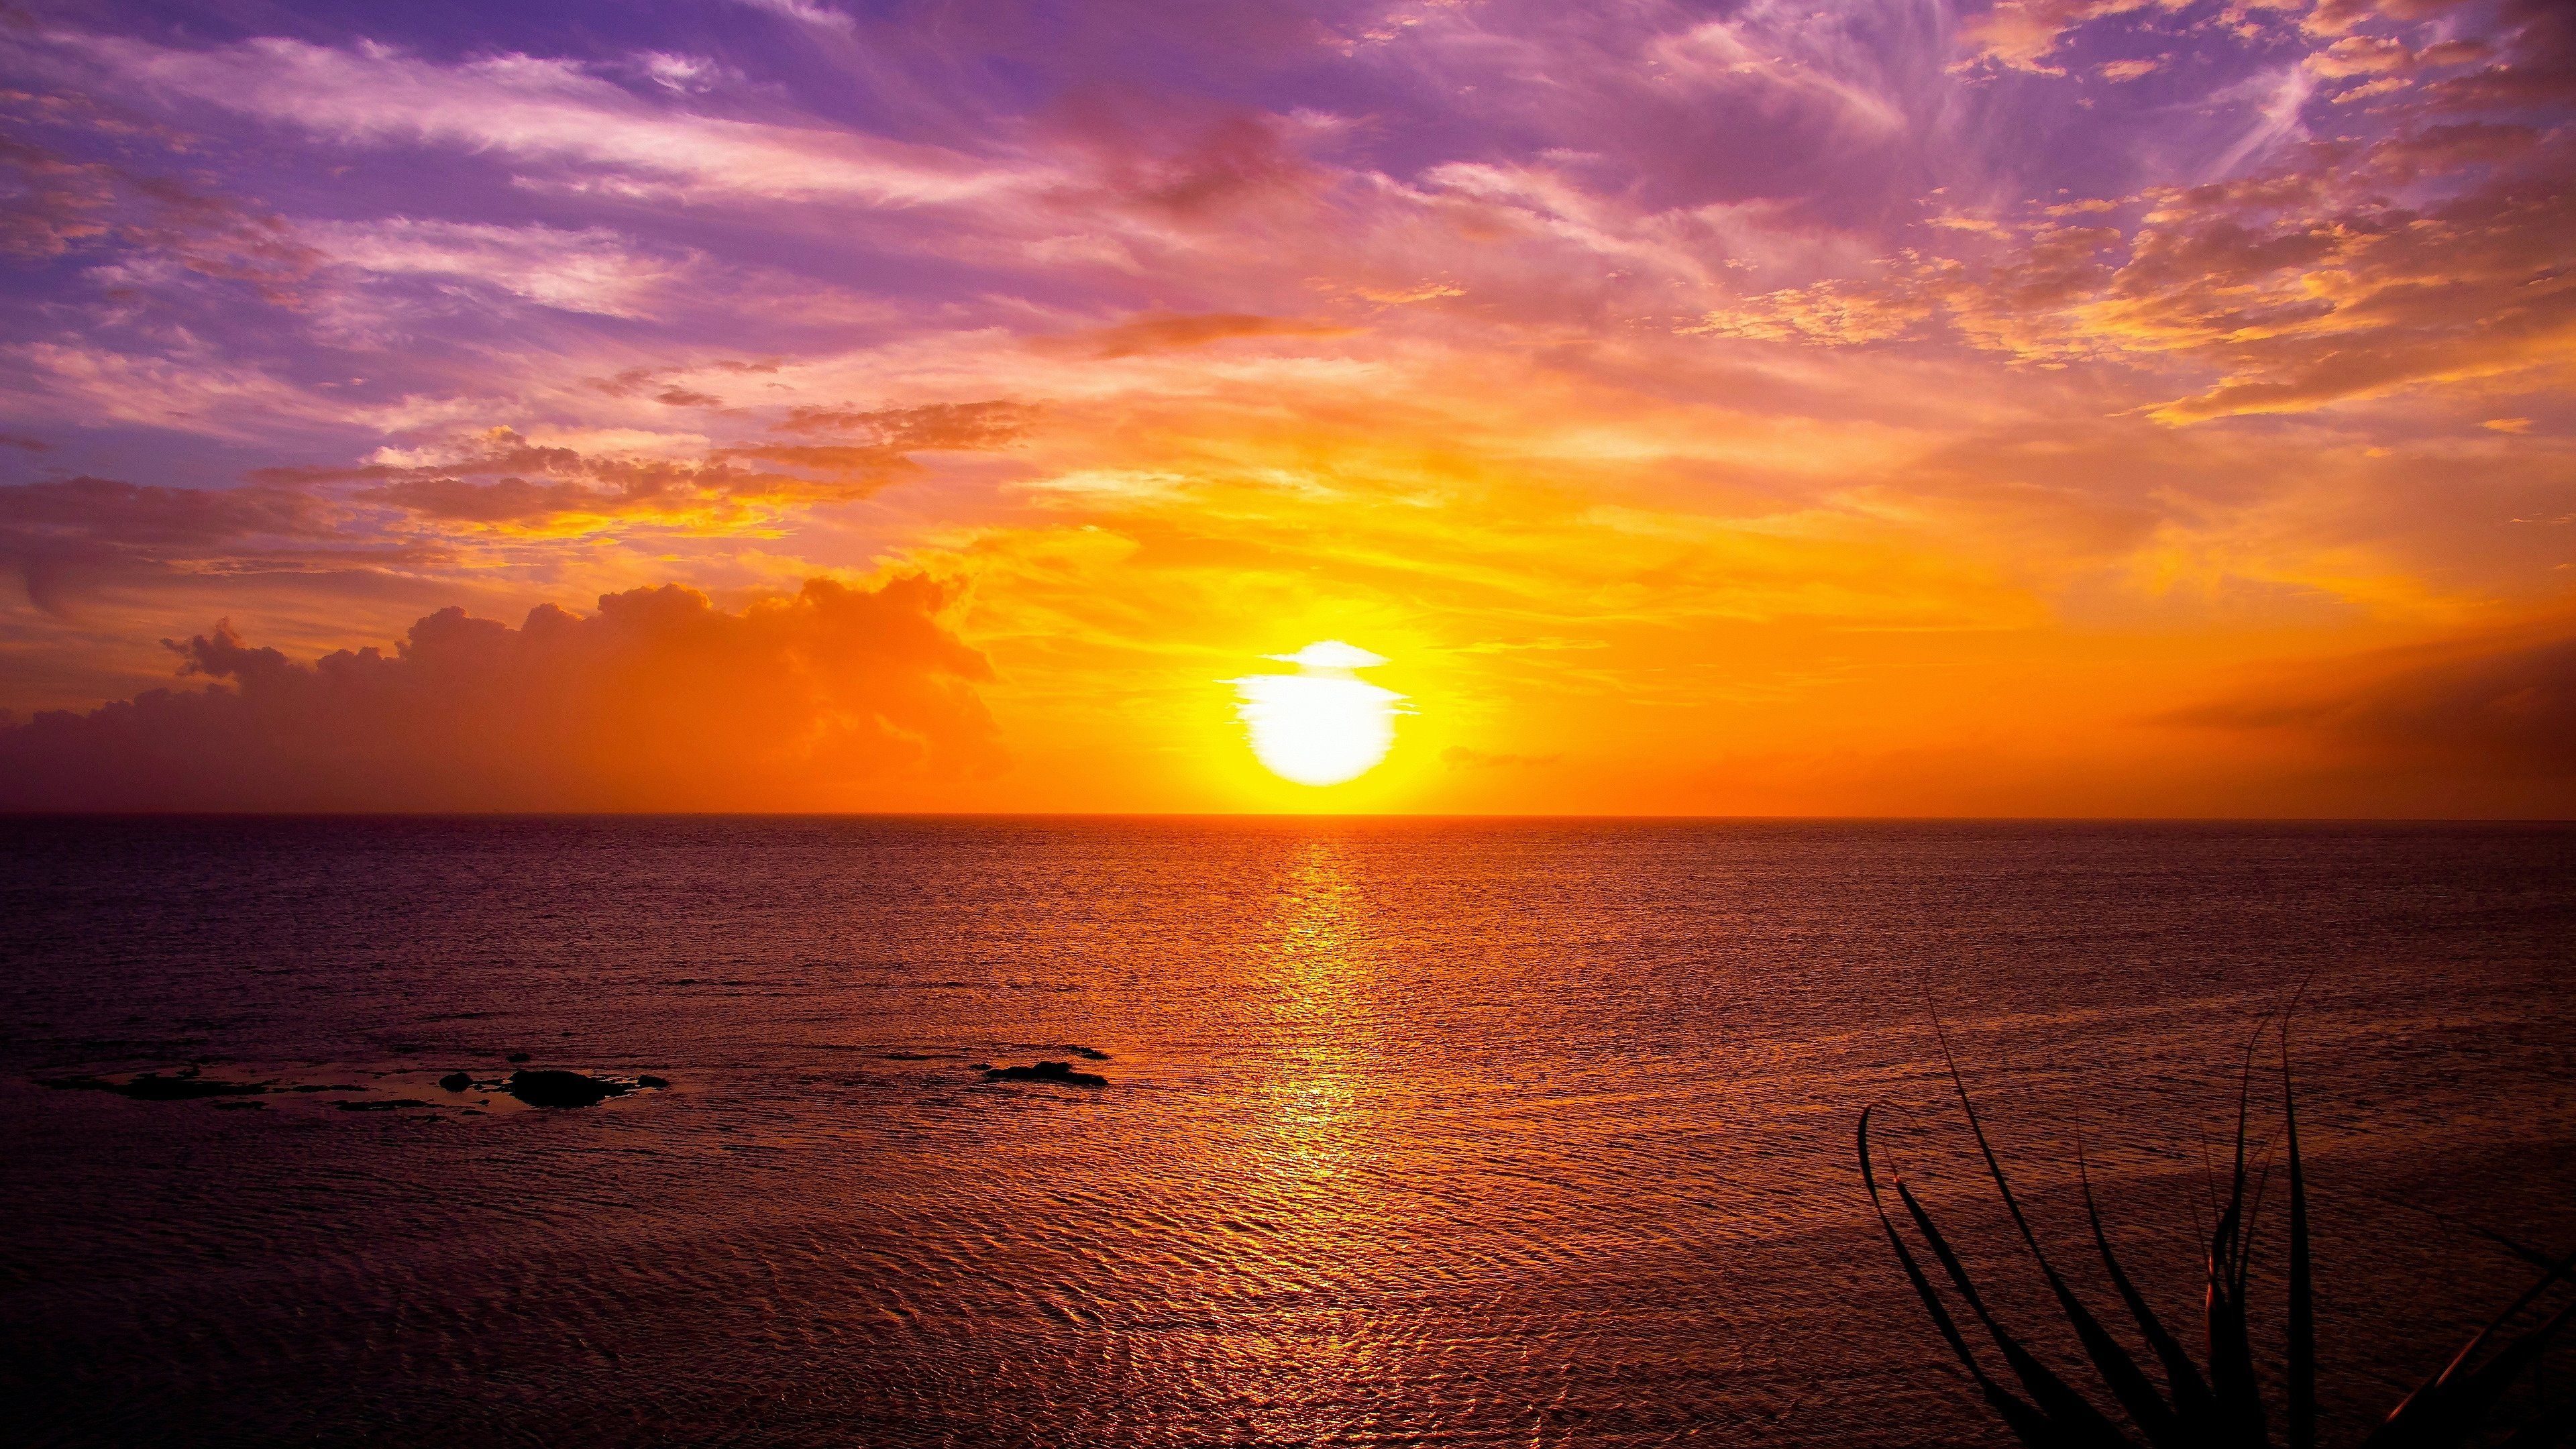  Sonnenuntergang Hintergrundbild 3840x2160. Hintergrundbilder 4k Sonnenuntergang Am Meer